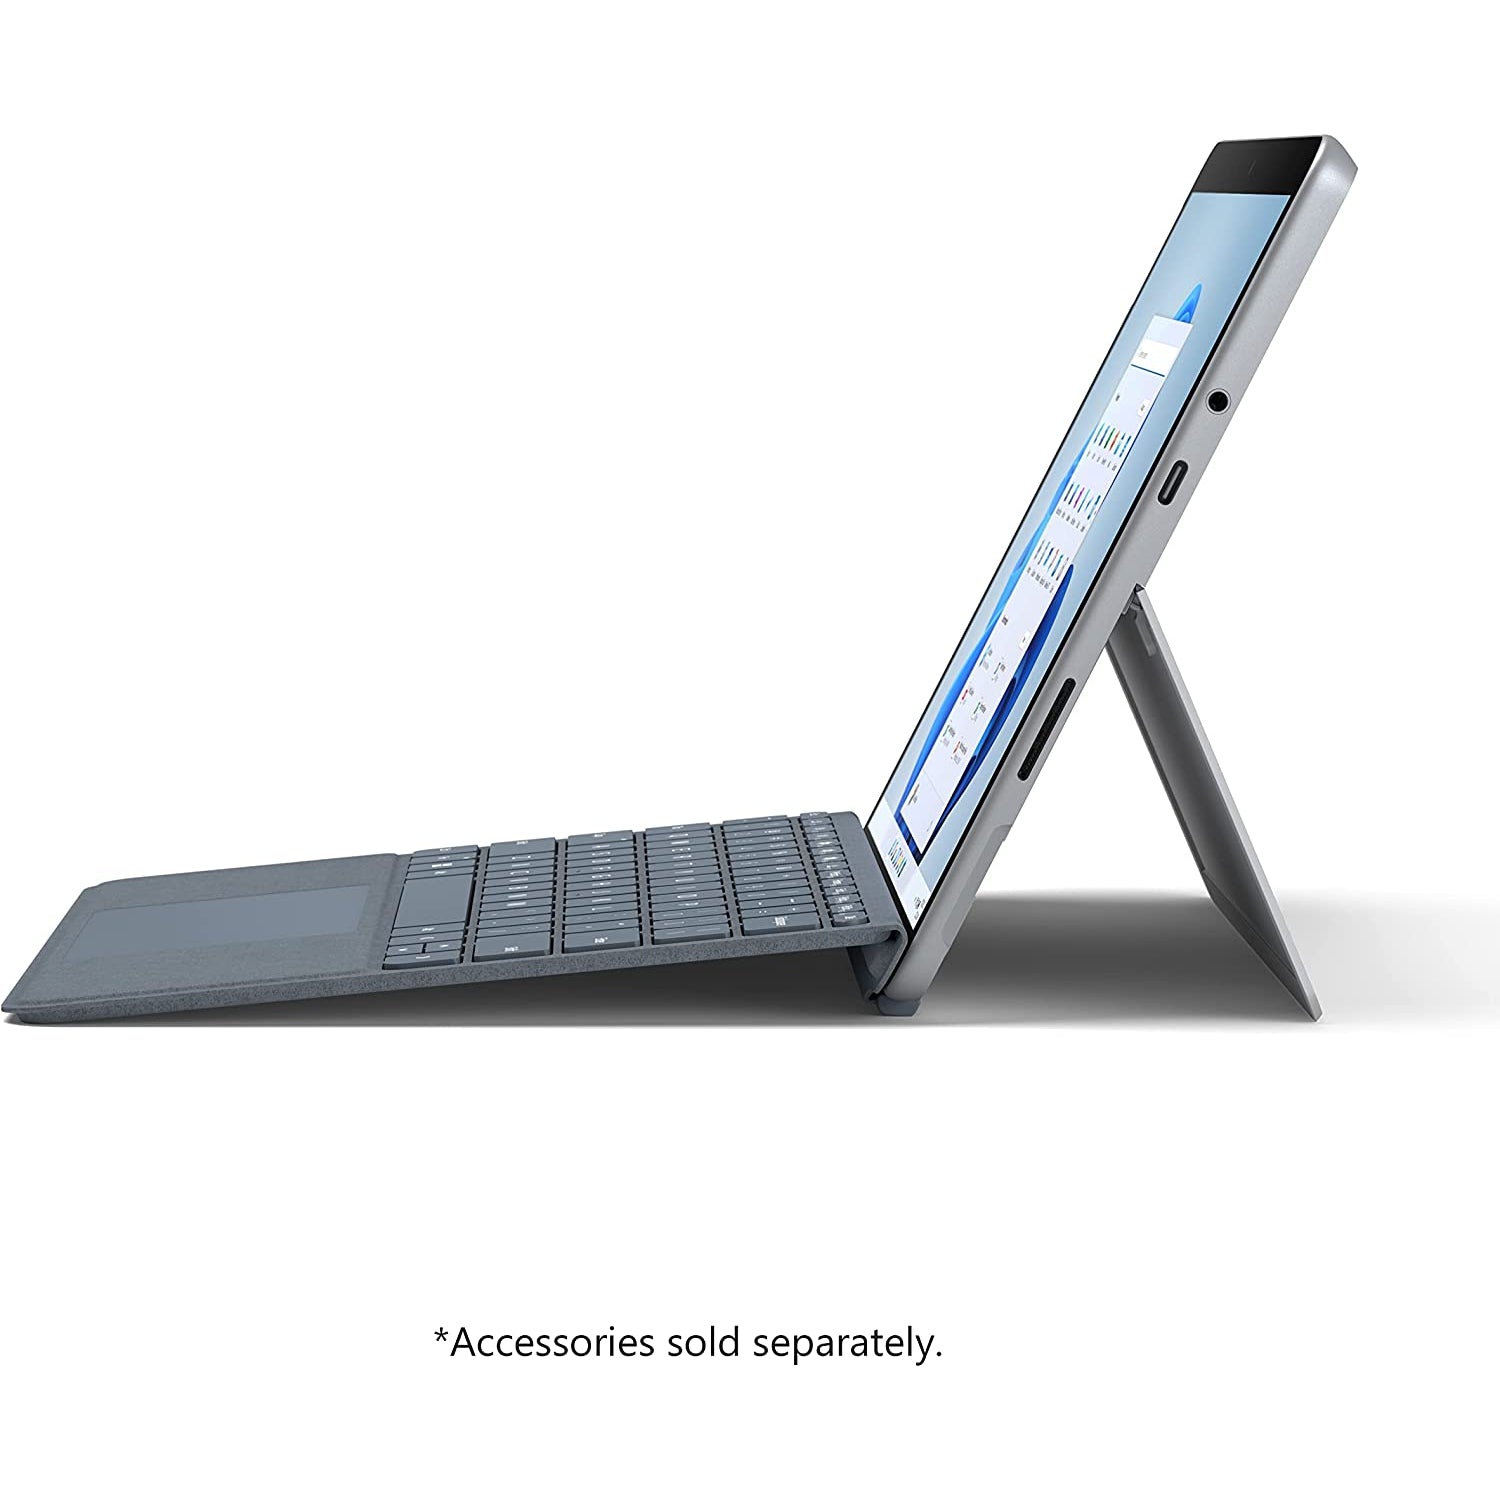 Microsoft Surface Go 2, Intel Pentium Gold, 8GB RAM, 128GB SSD, 10.5”, Platinum - Refurbished Good